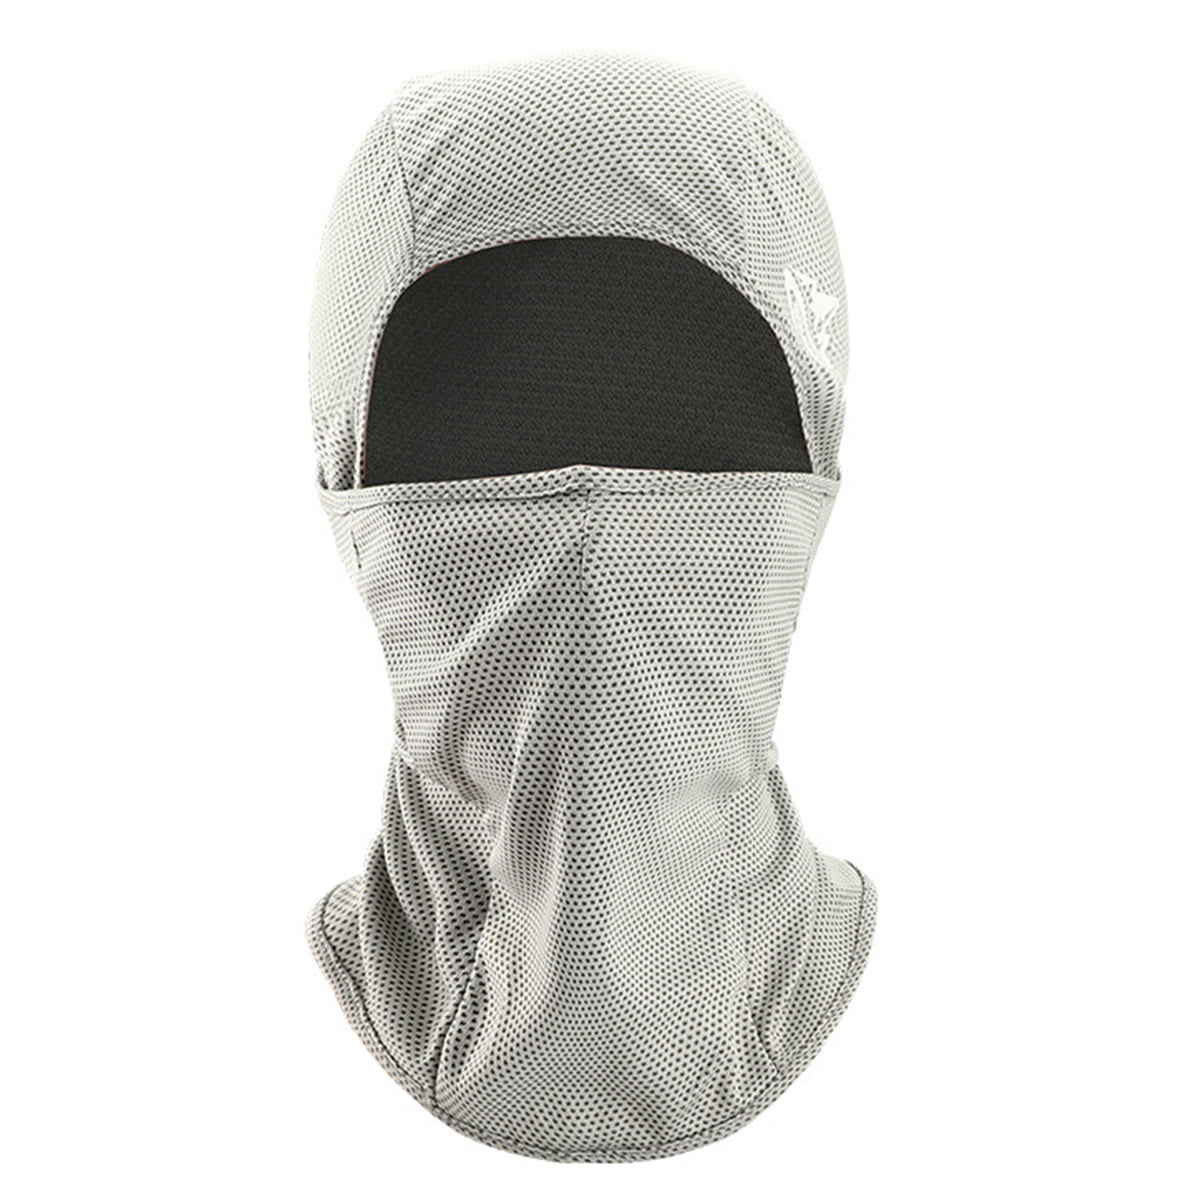 Kvlomore Balaclava Ski Mask Face Head Cover UV Sun Full Protection Cycling Outdoors Accesses 4 Packs 